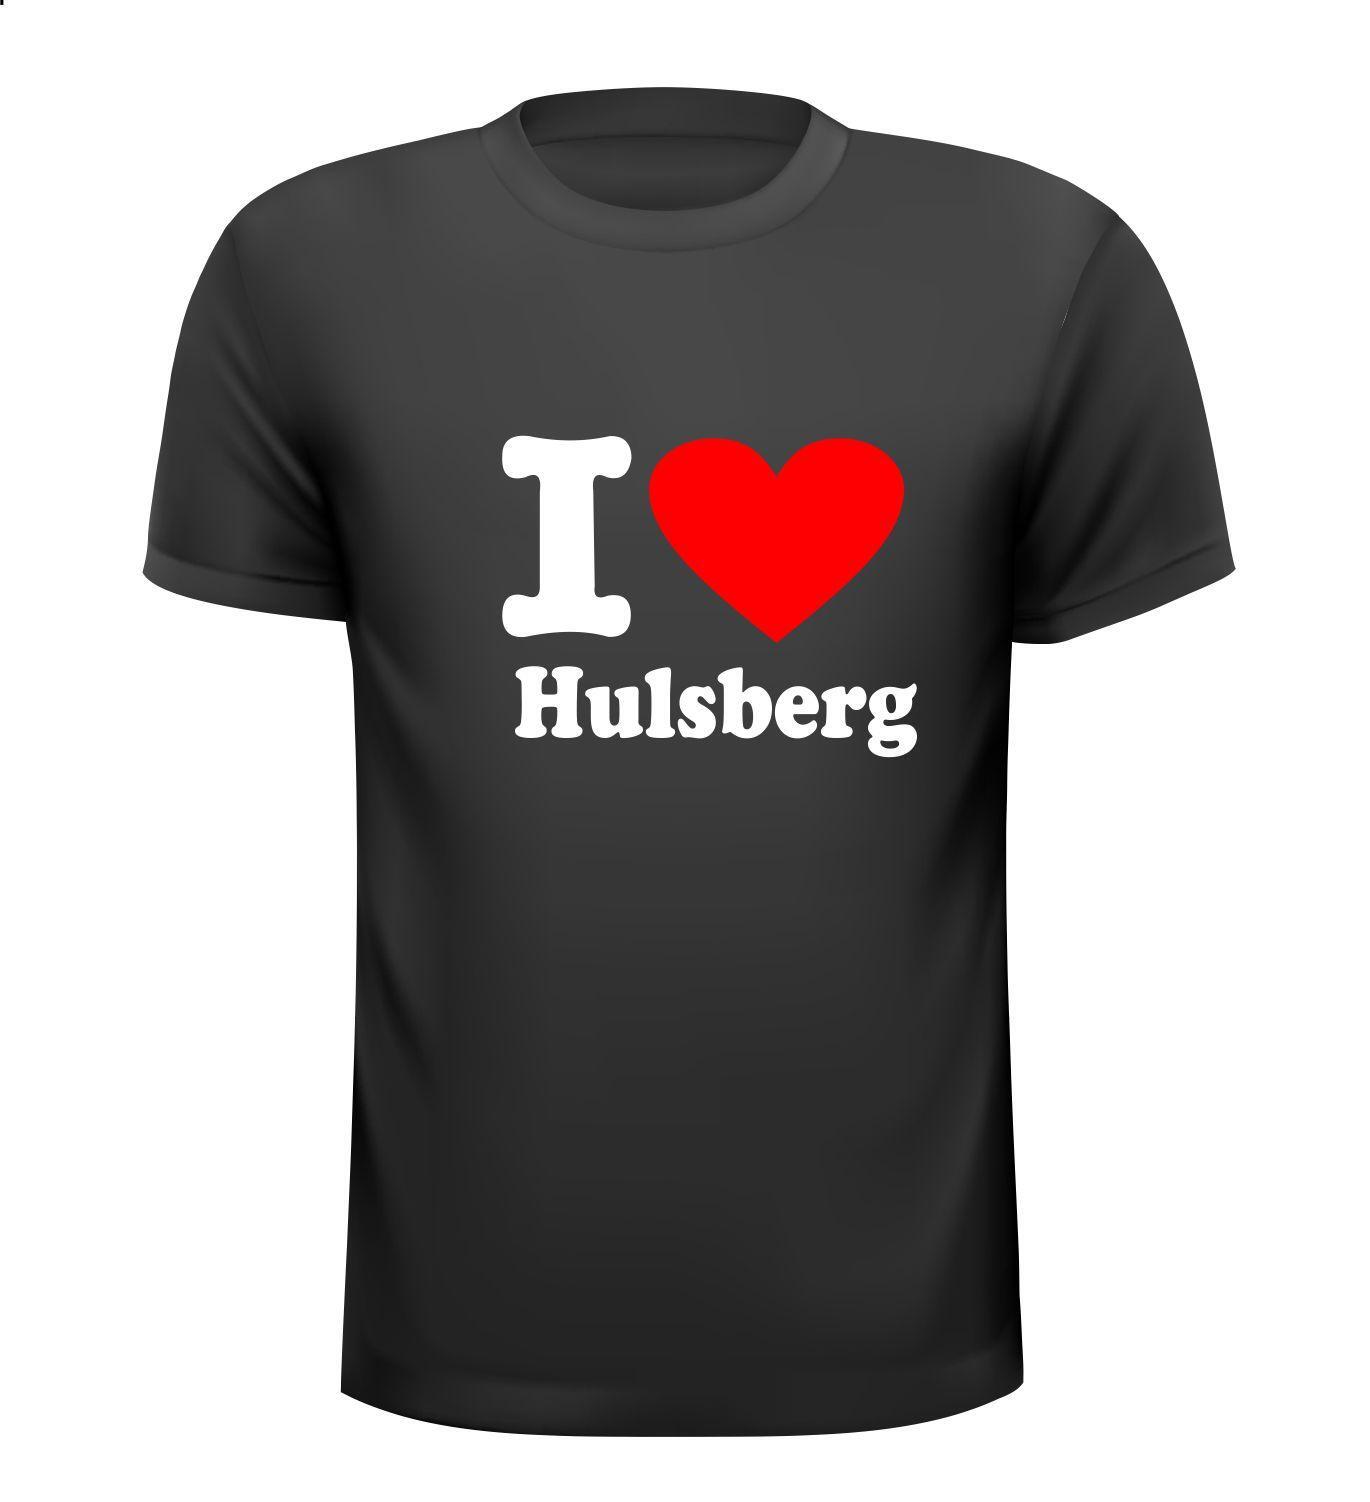 I love Hulsberg t-shirt houden van trots op Hulsberg